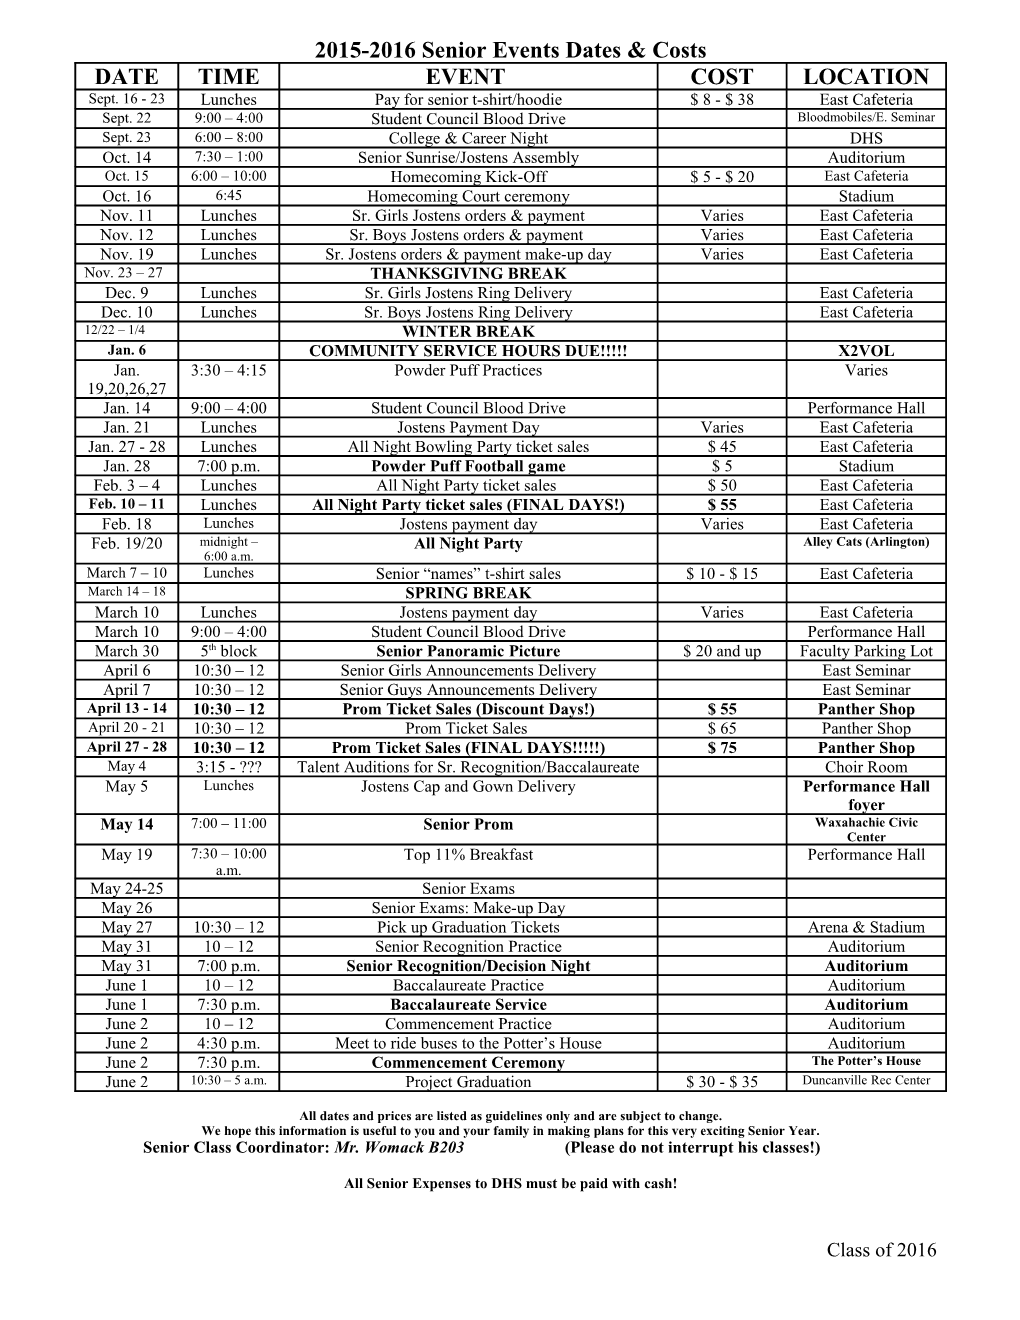 Seniors 2004 Events Calendar